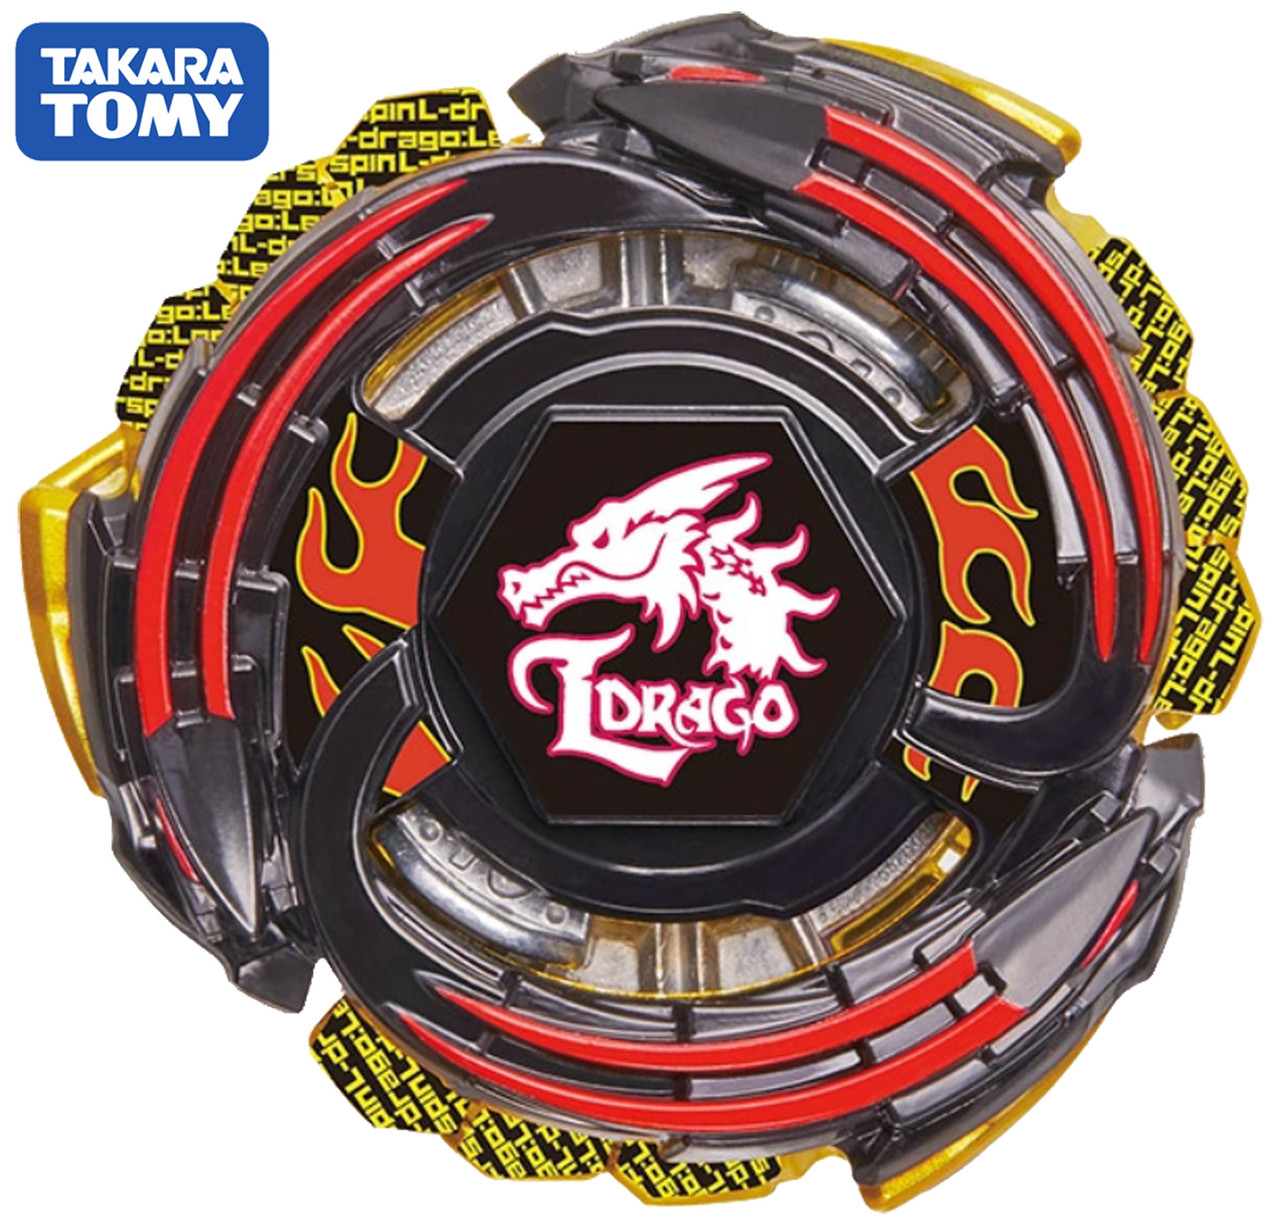 TAKARA TOMY B-151 02 Lightning L-Drago 